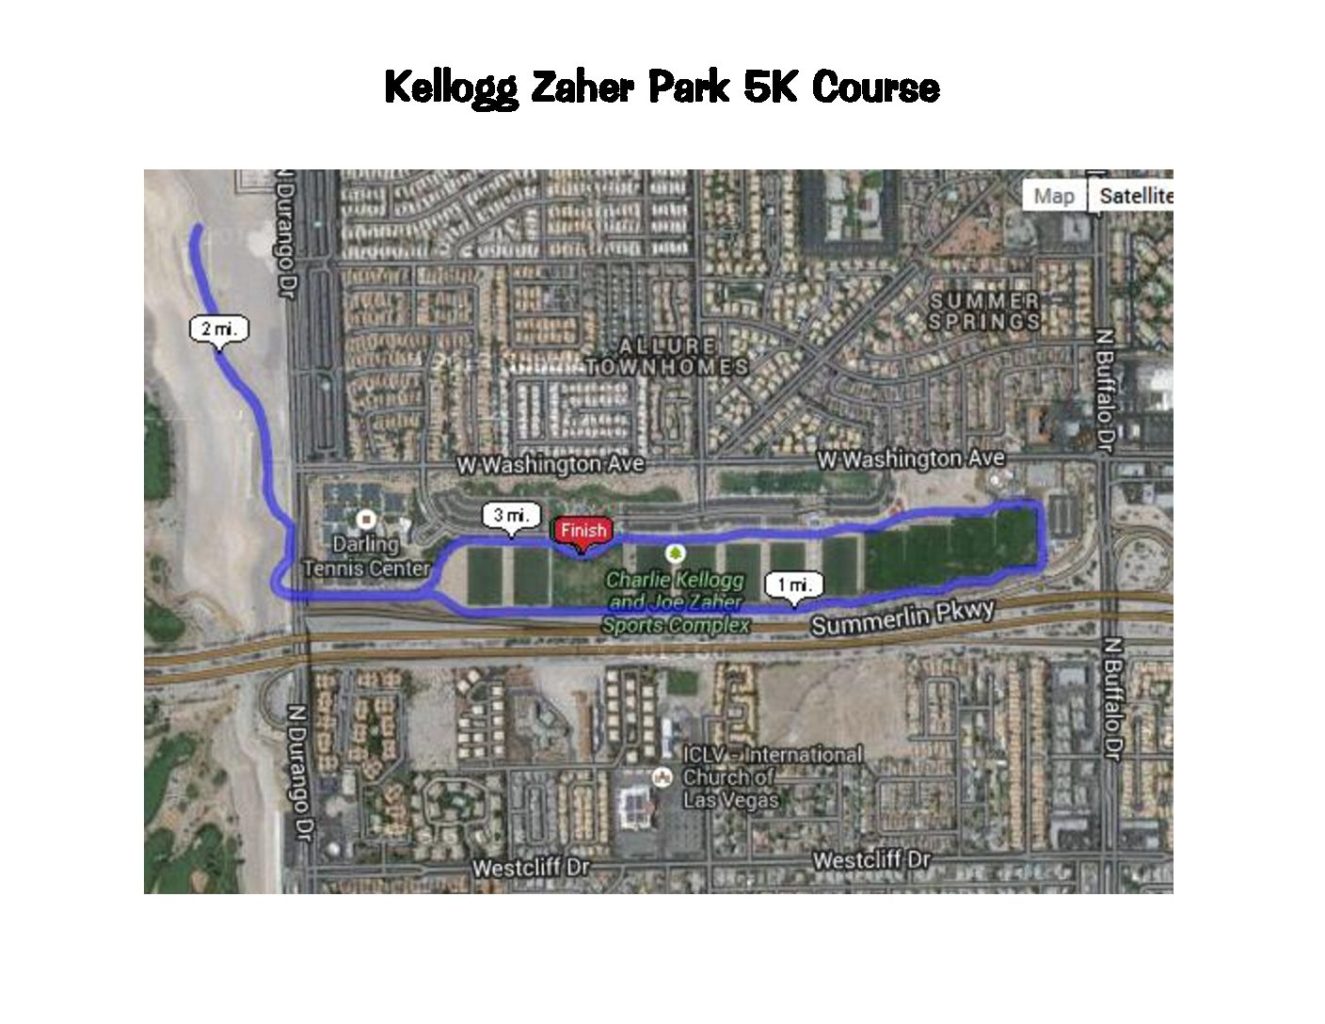 Course - Kellogg Zaher Park